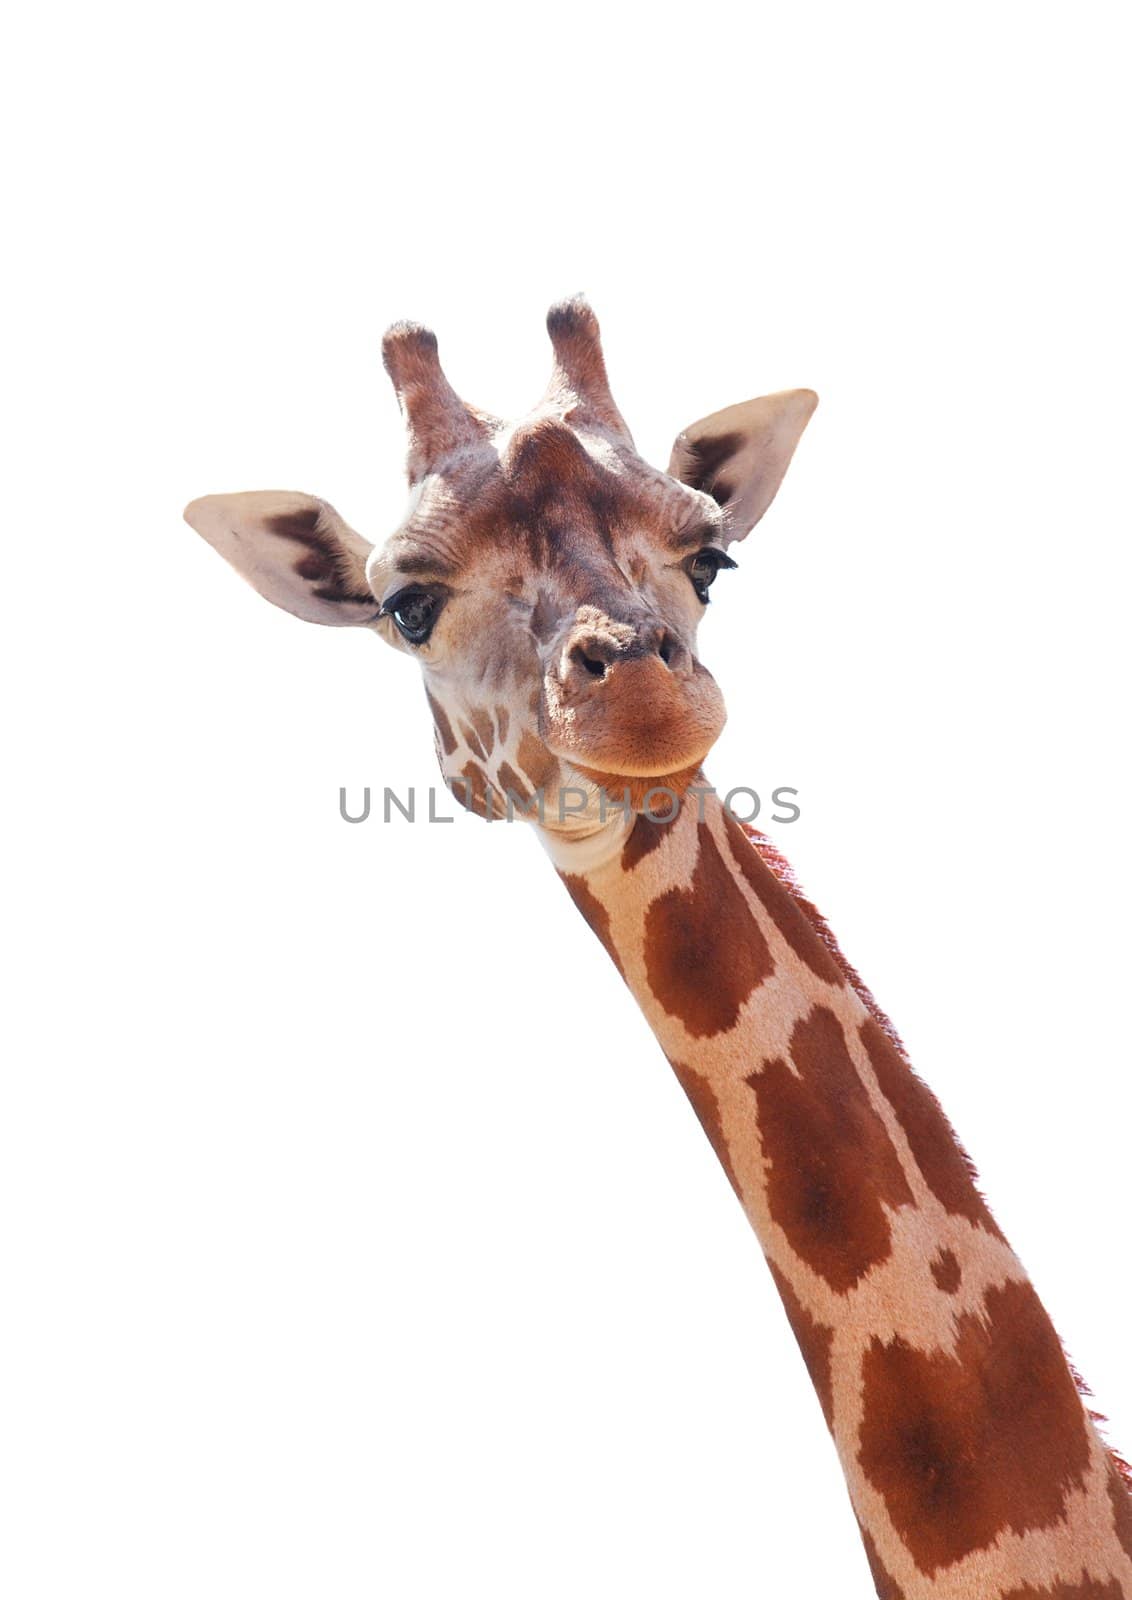 Giraffe portrait isolated on white background